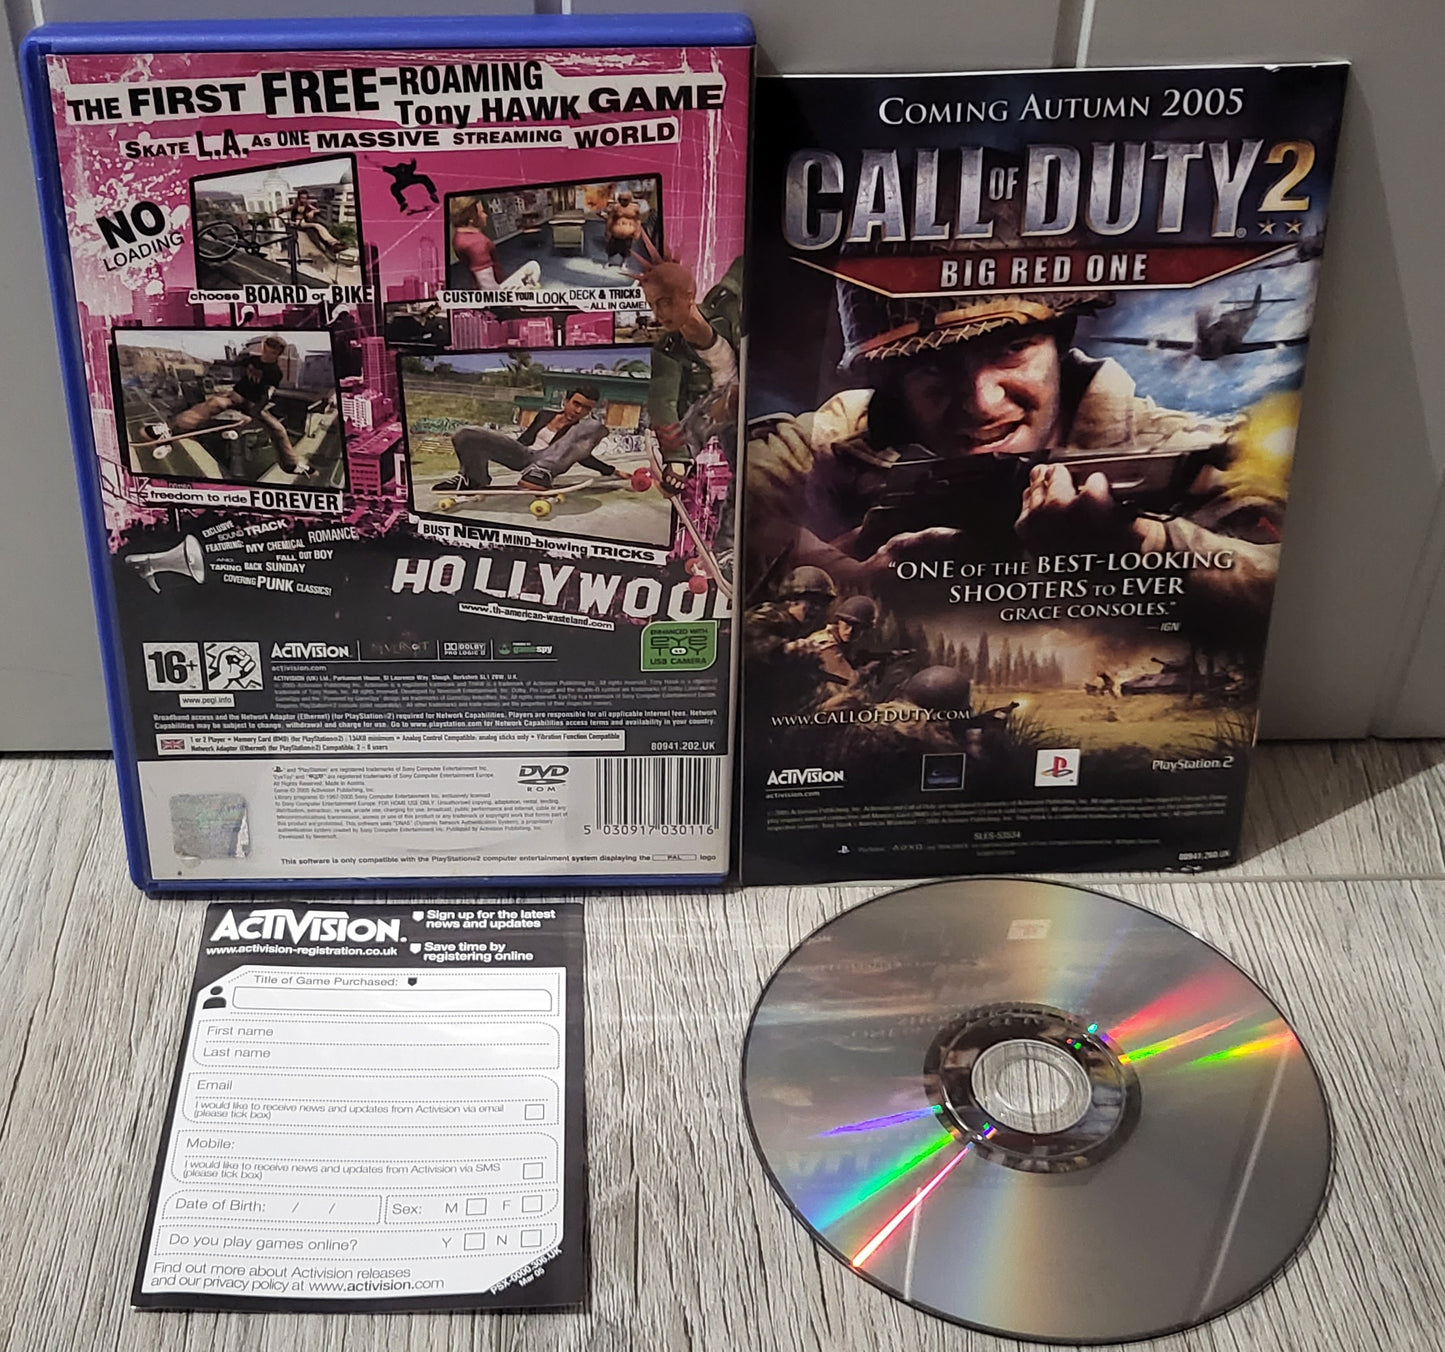 Tony Hawk's American Wasteland Sony Playstation 2 (PS2) Game